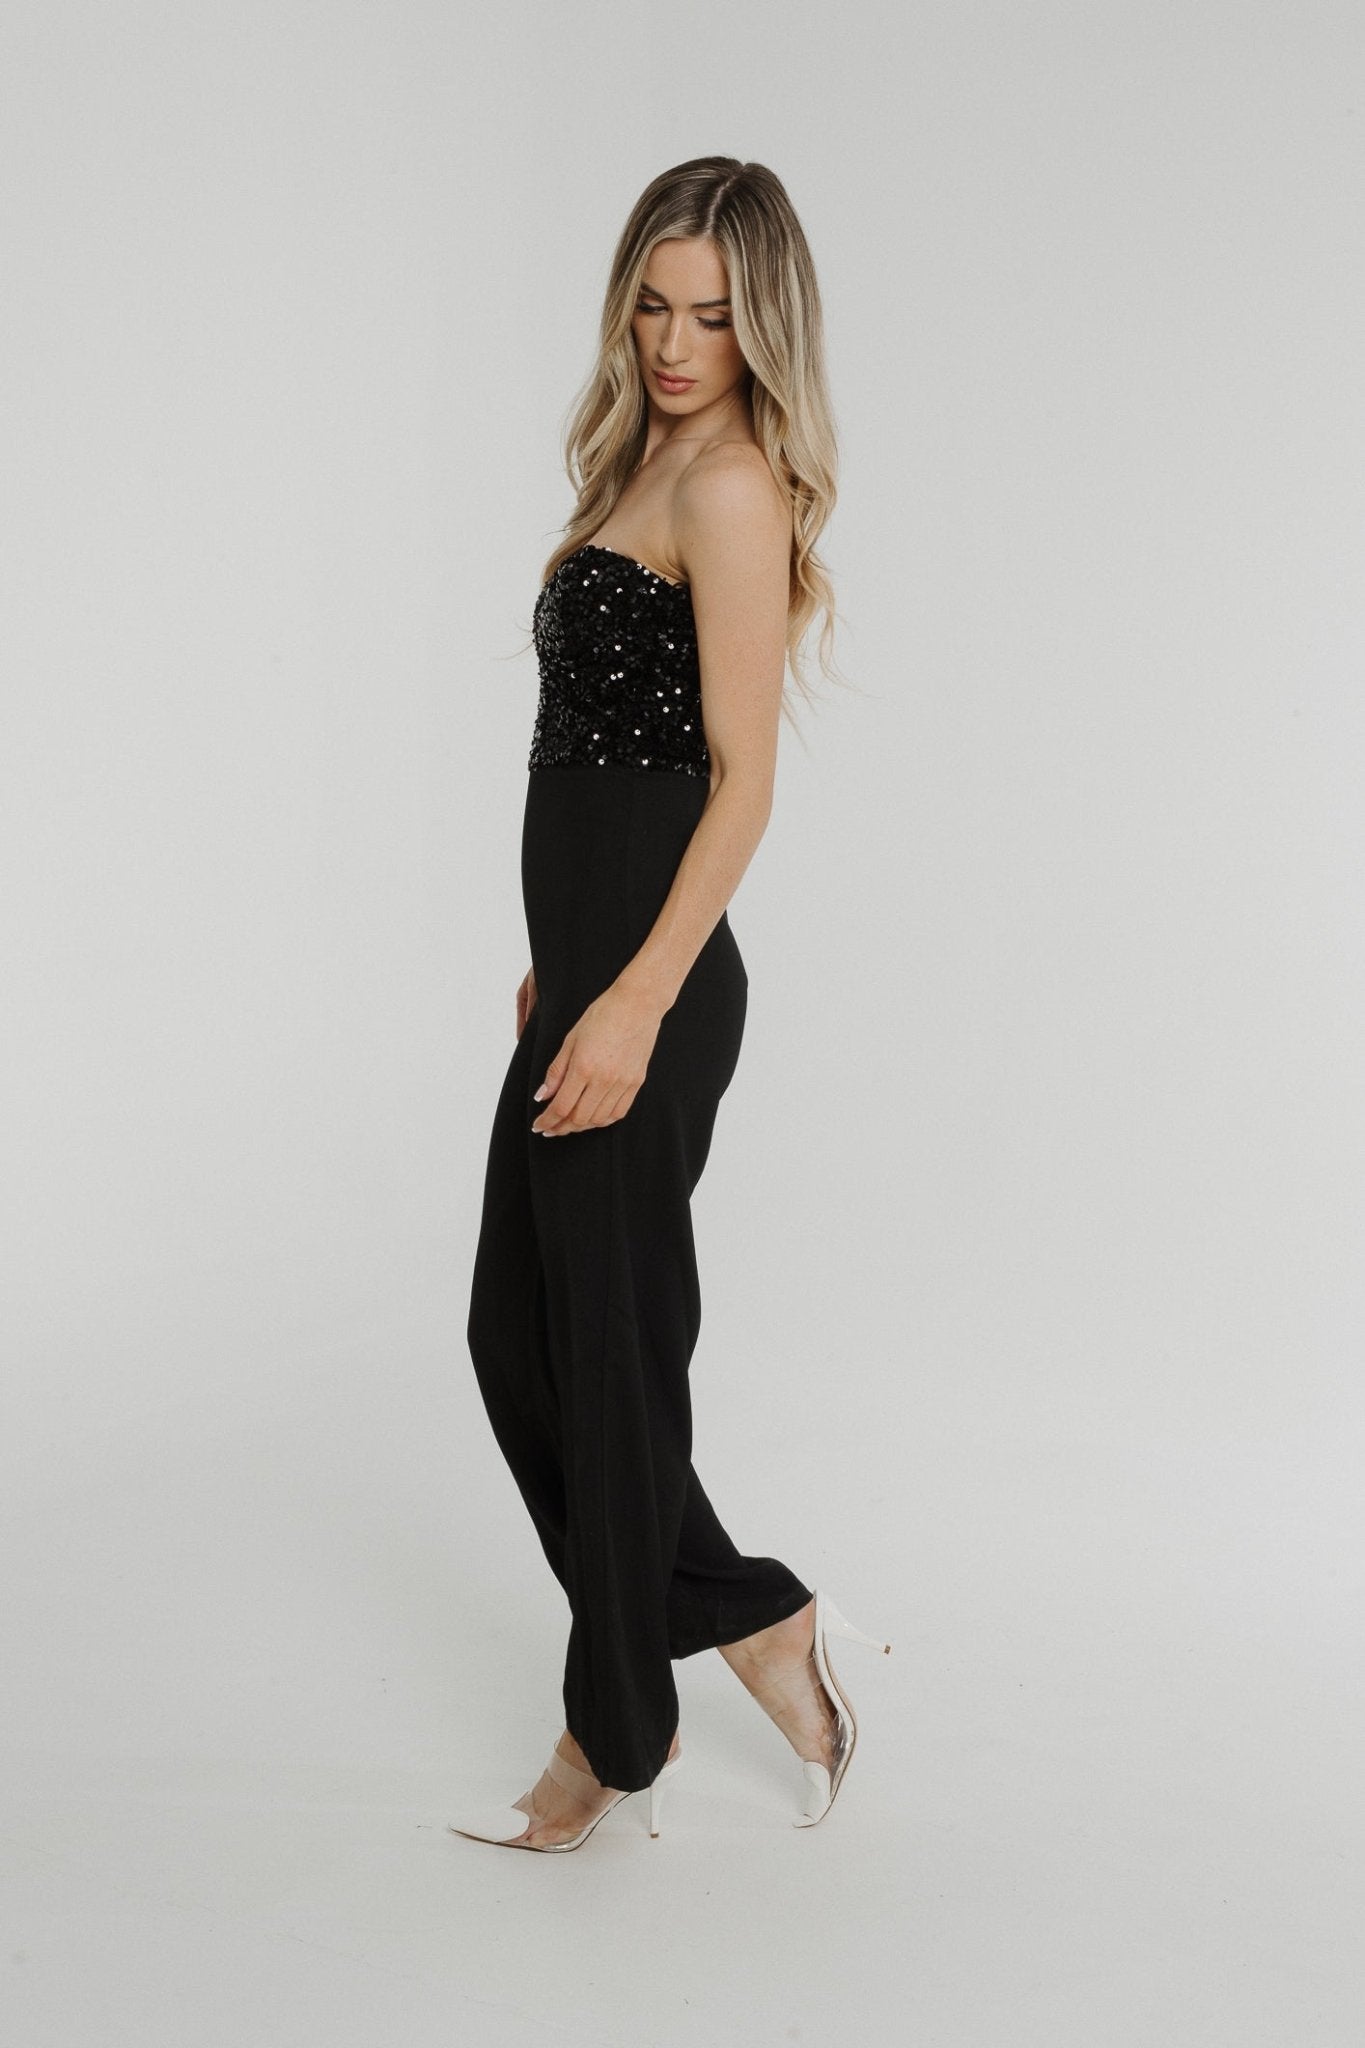 Kate Embellished Jumpsuit In Black - The Walk in Wardrobe